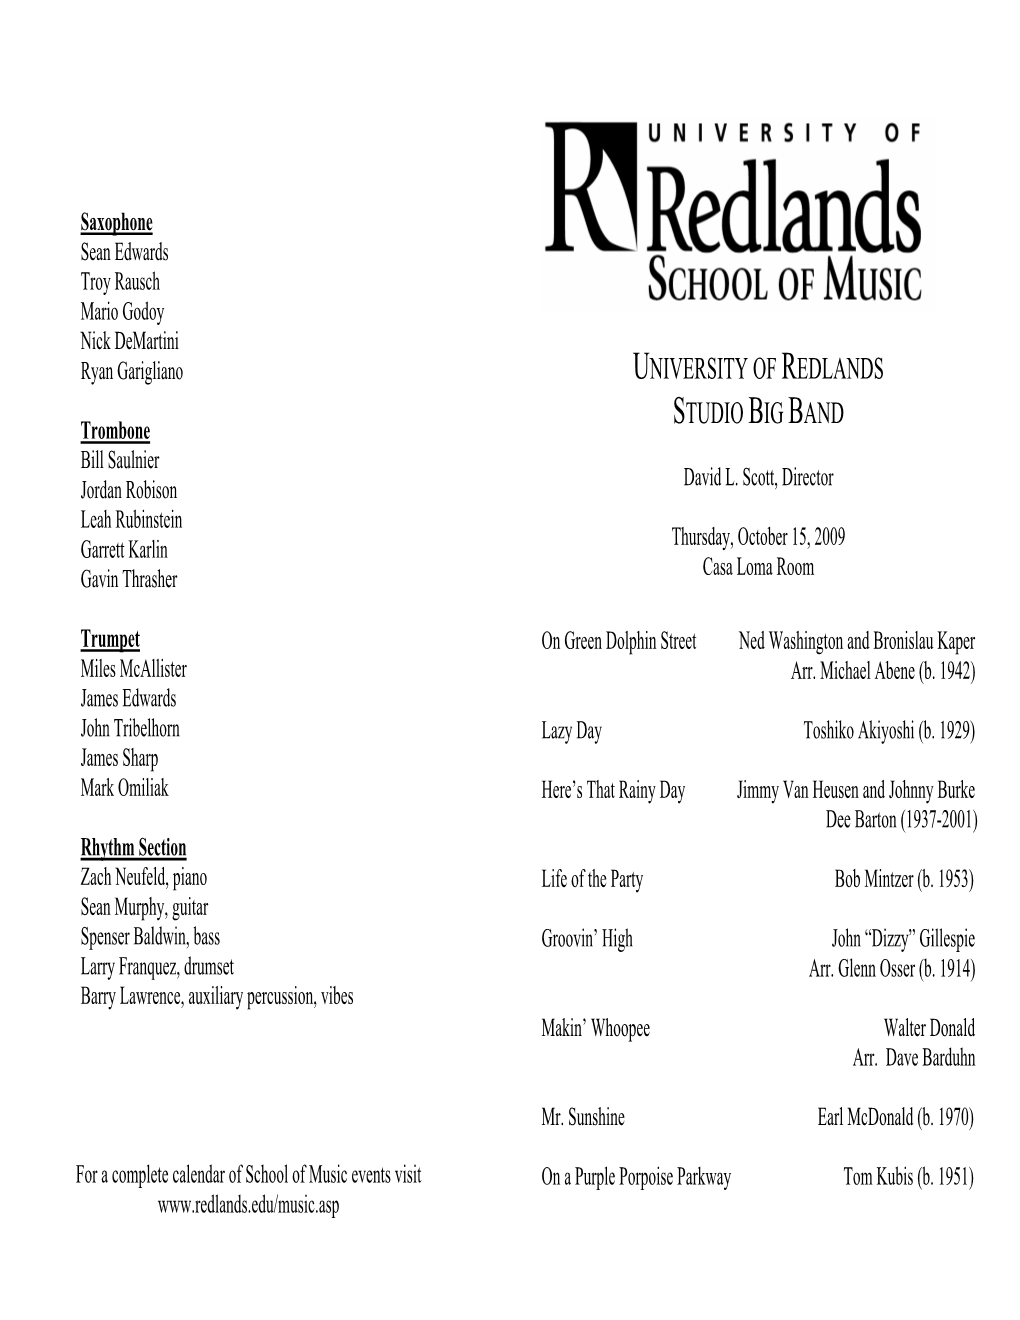 University of Redlands Studio Big Band